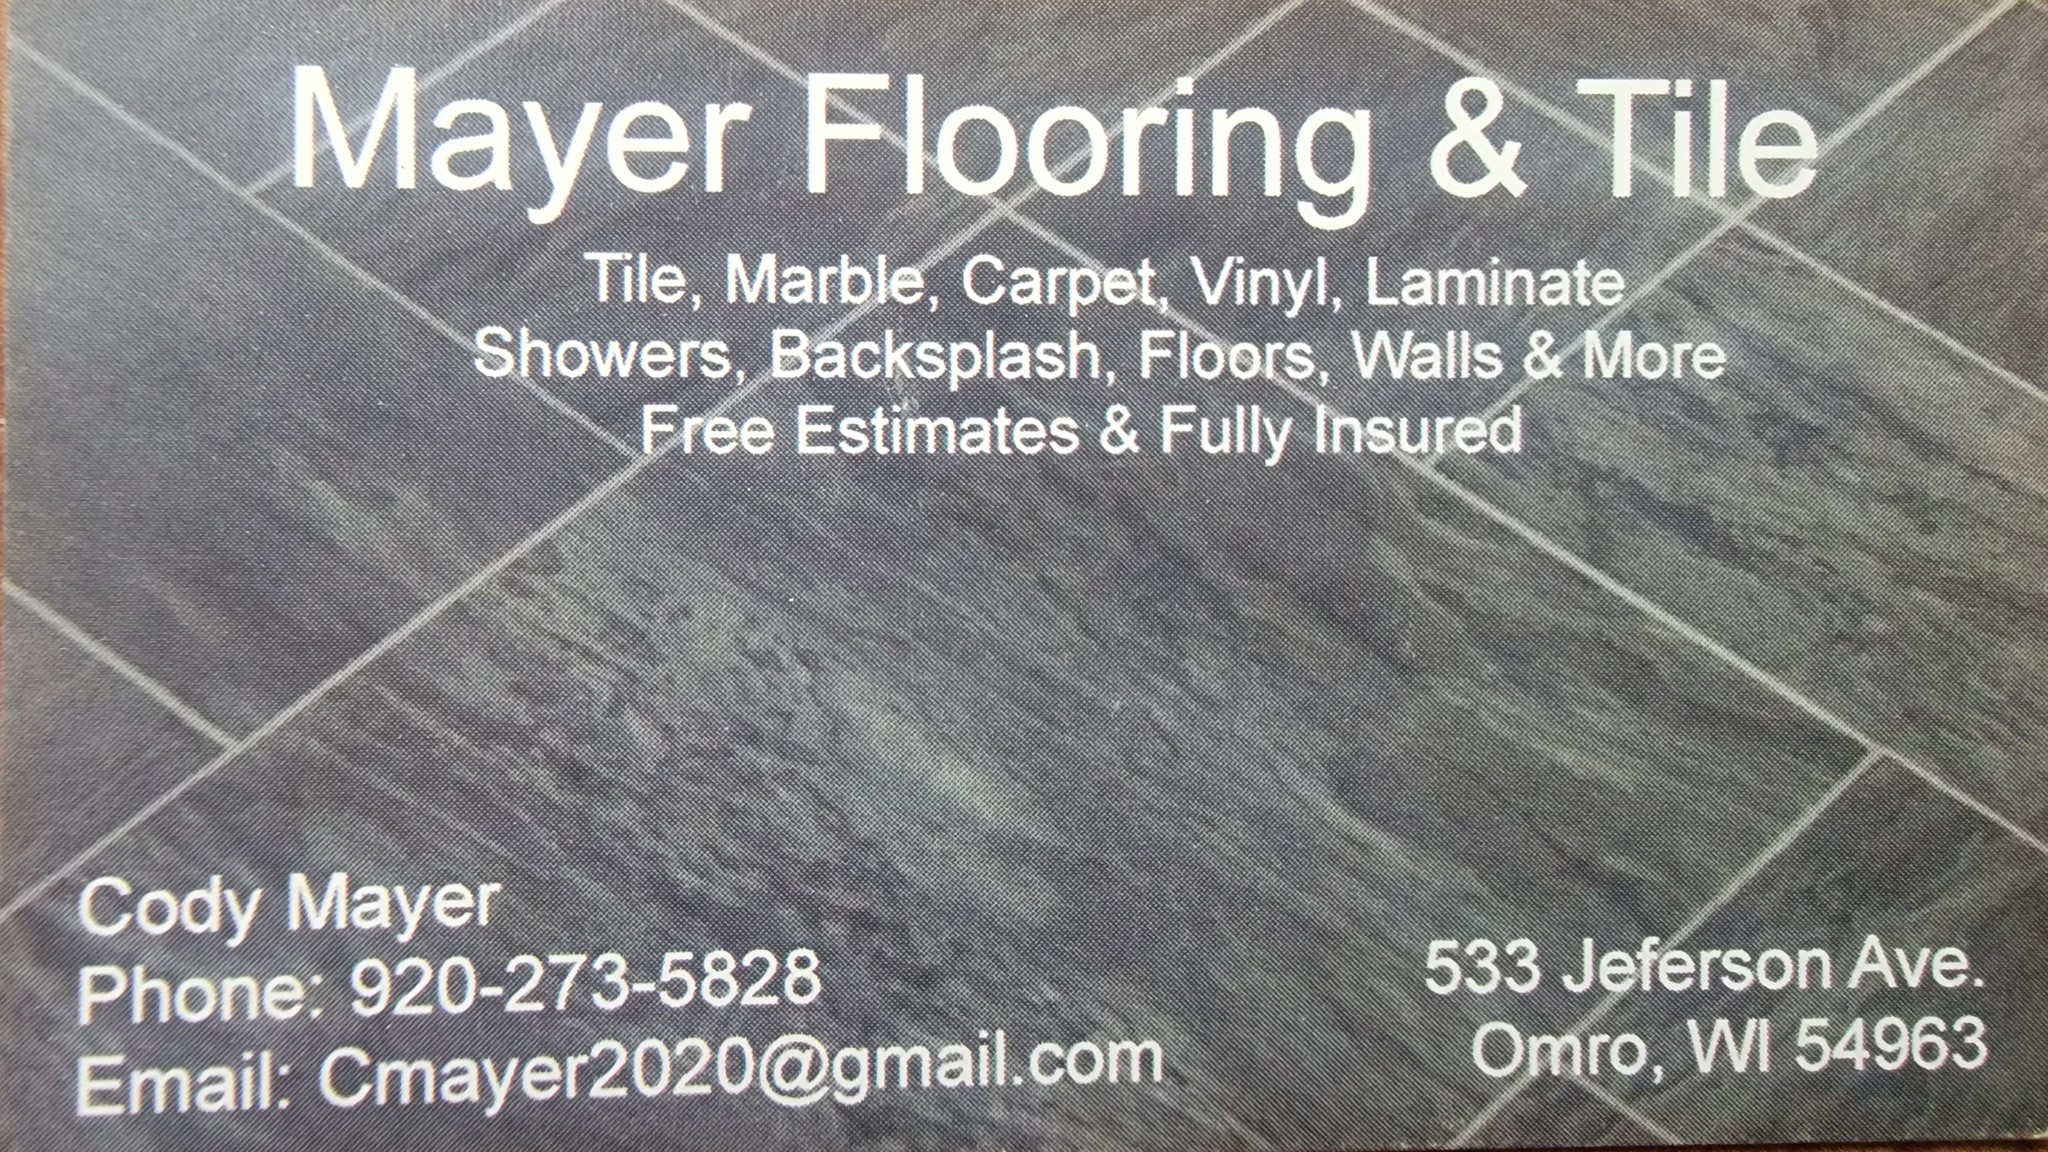 Mayer Flooring & Tile